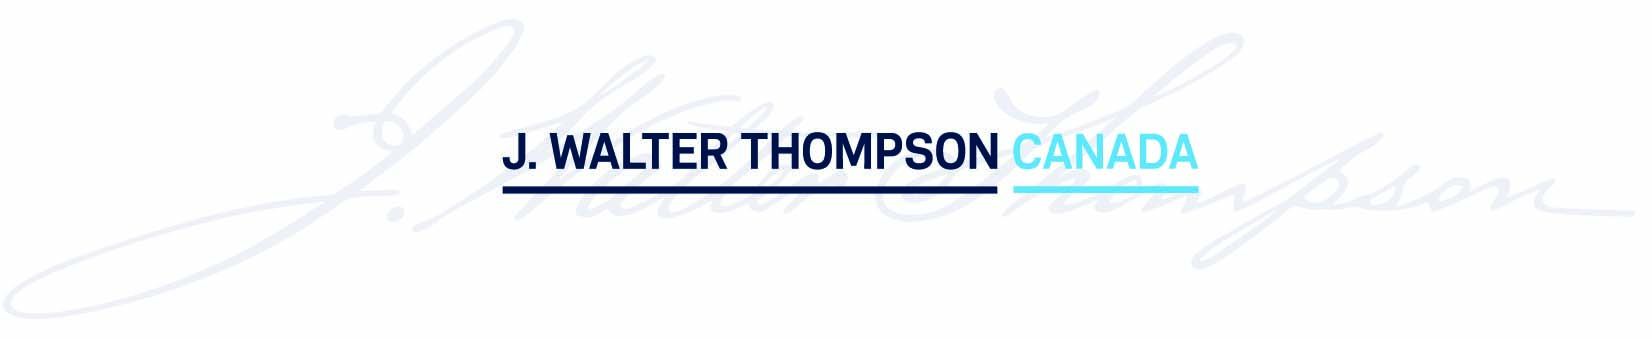 j-walter-thompson-signature